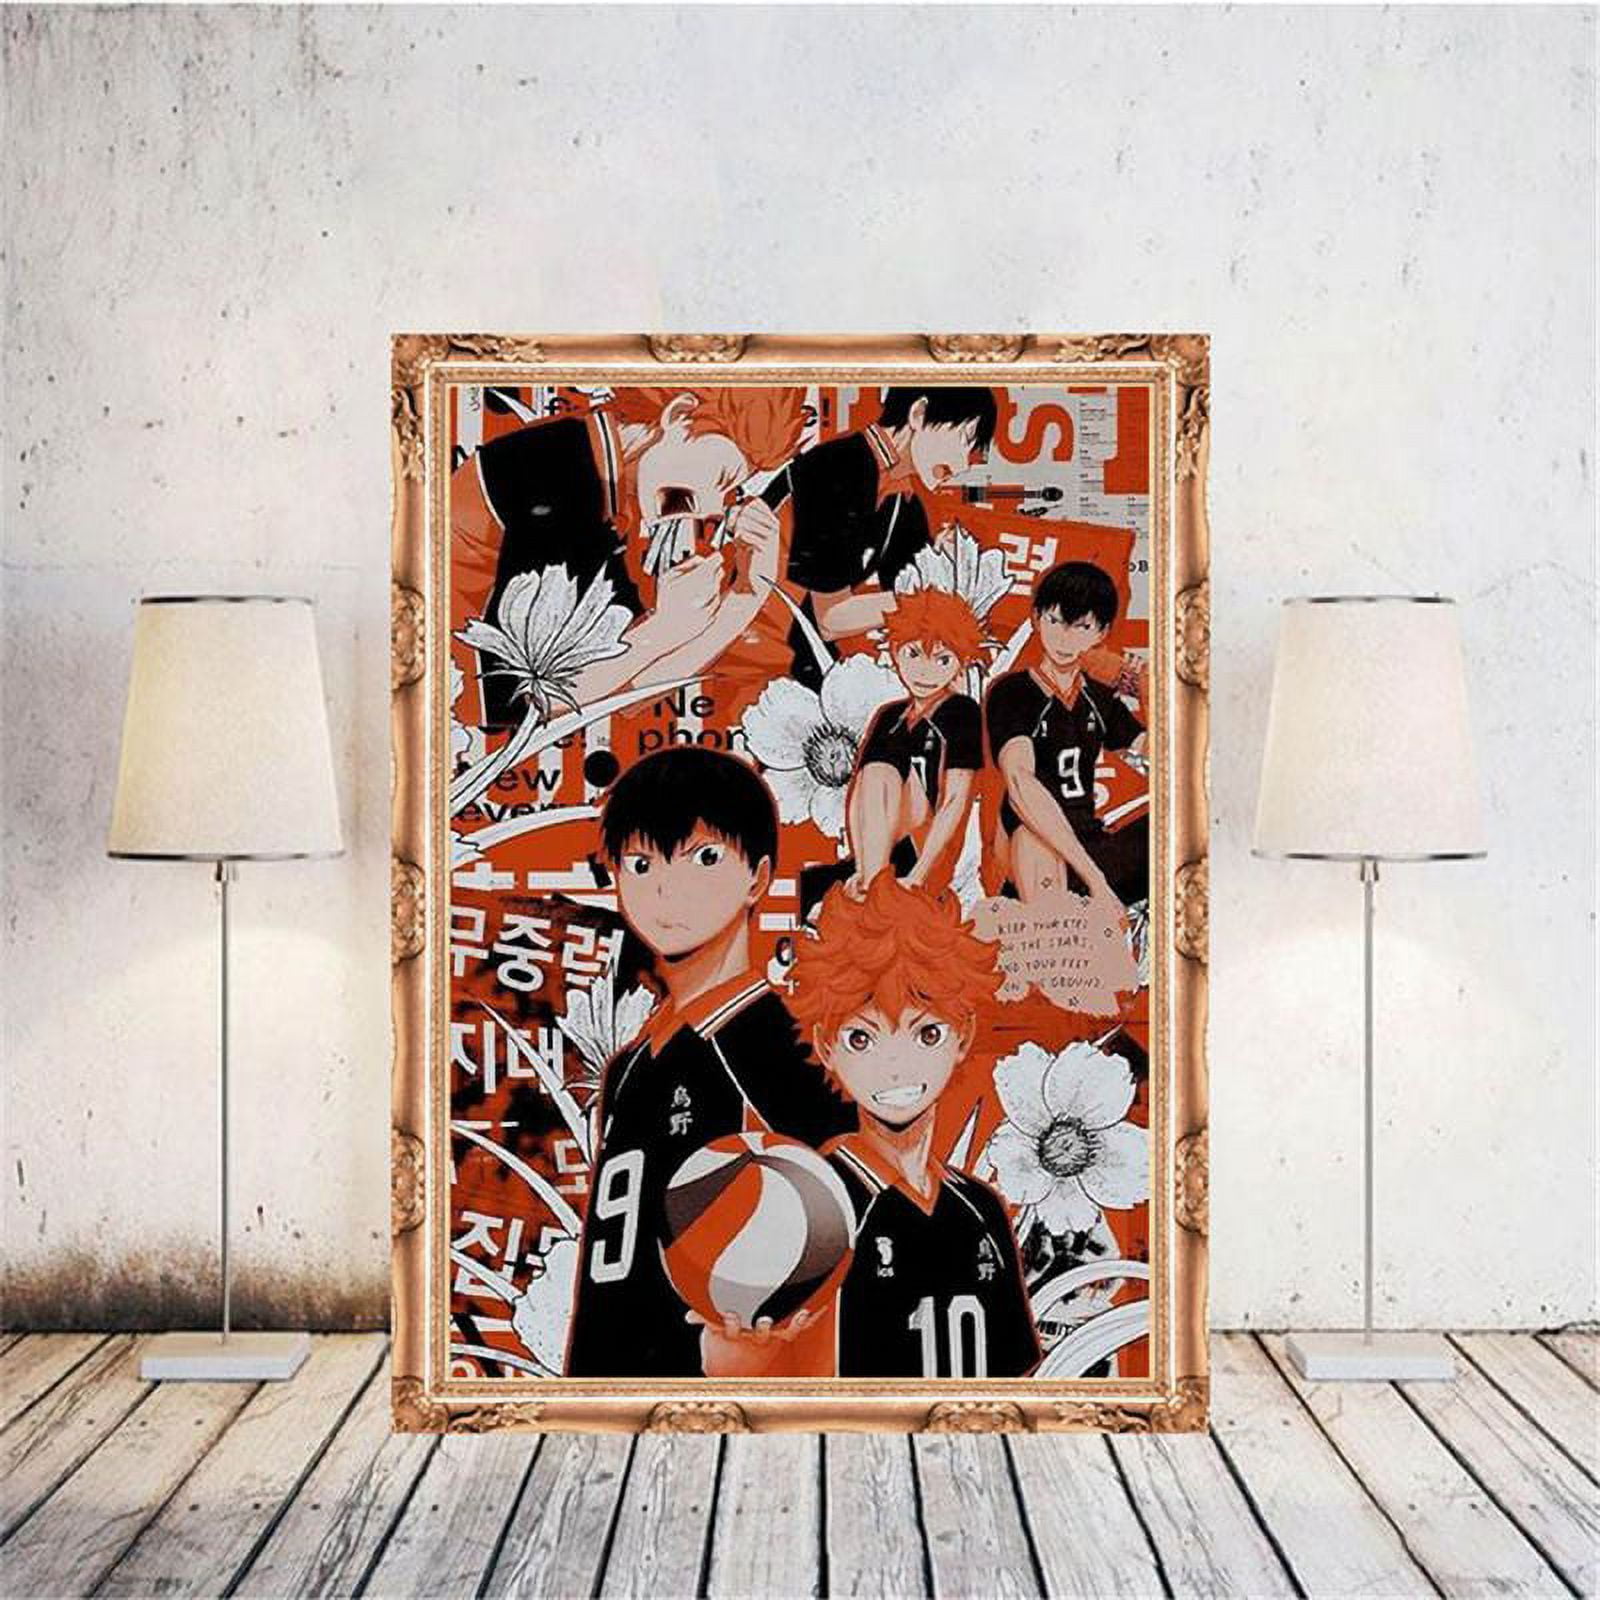  Haikyuu Anime Poster and Prints Unframed Wall Art